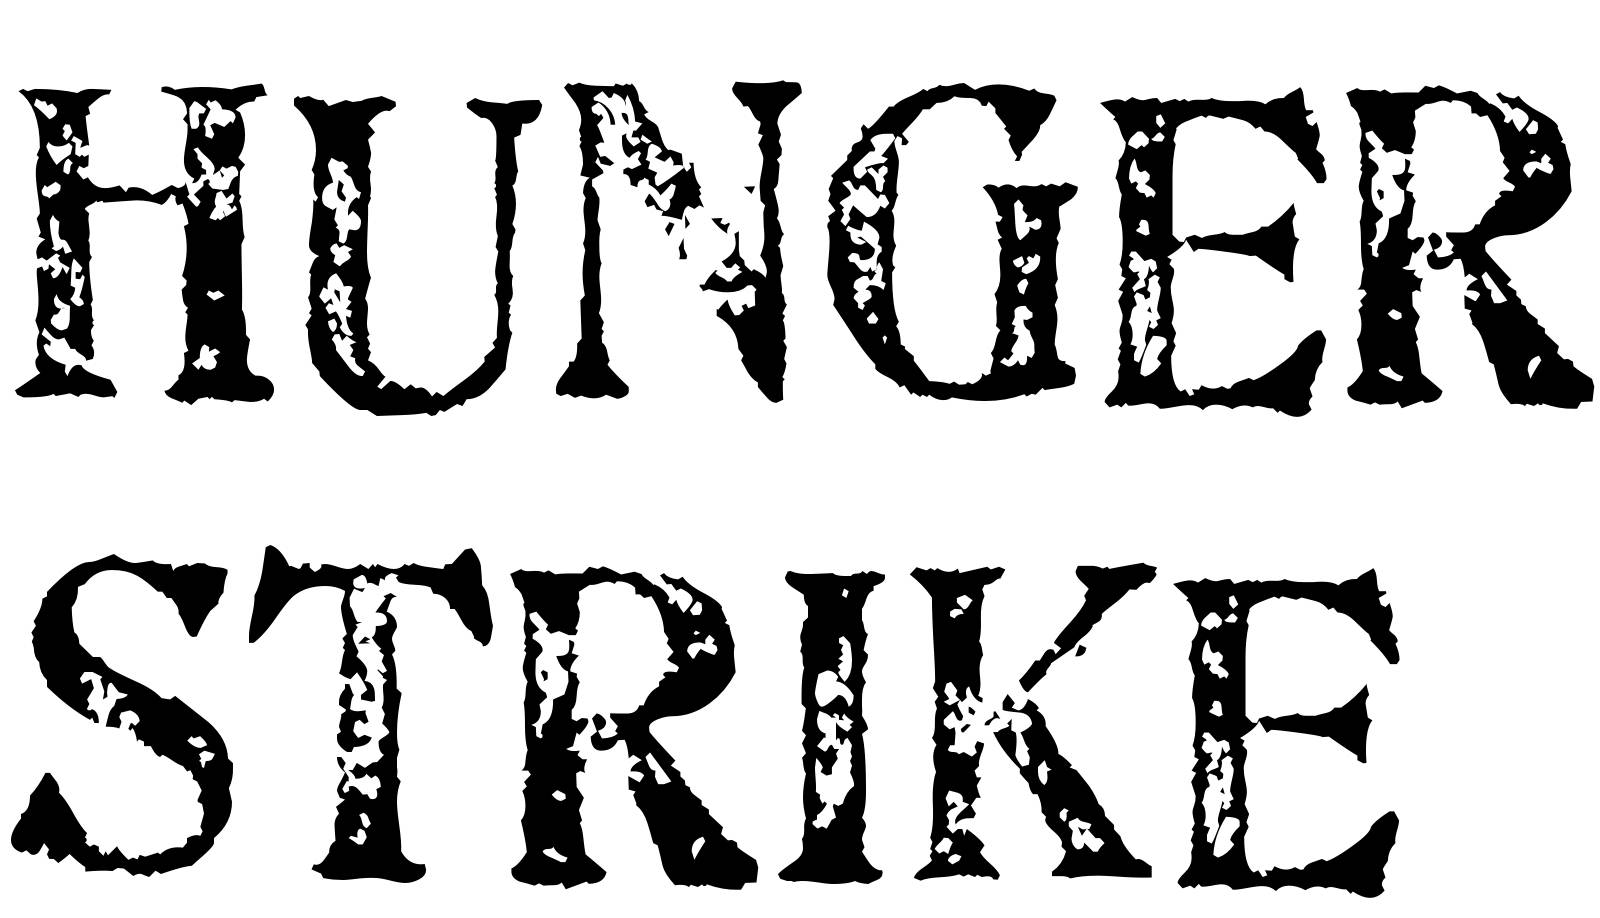 Hunger Strike: Lawful or awful?